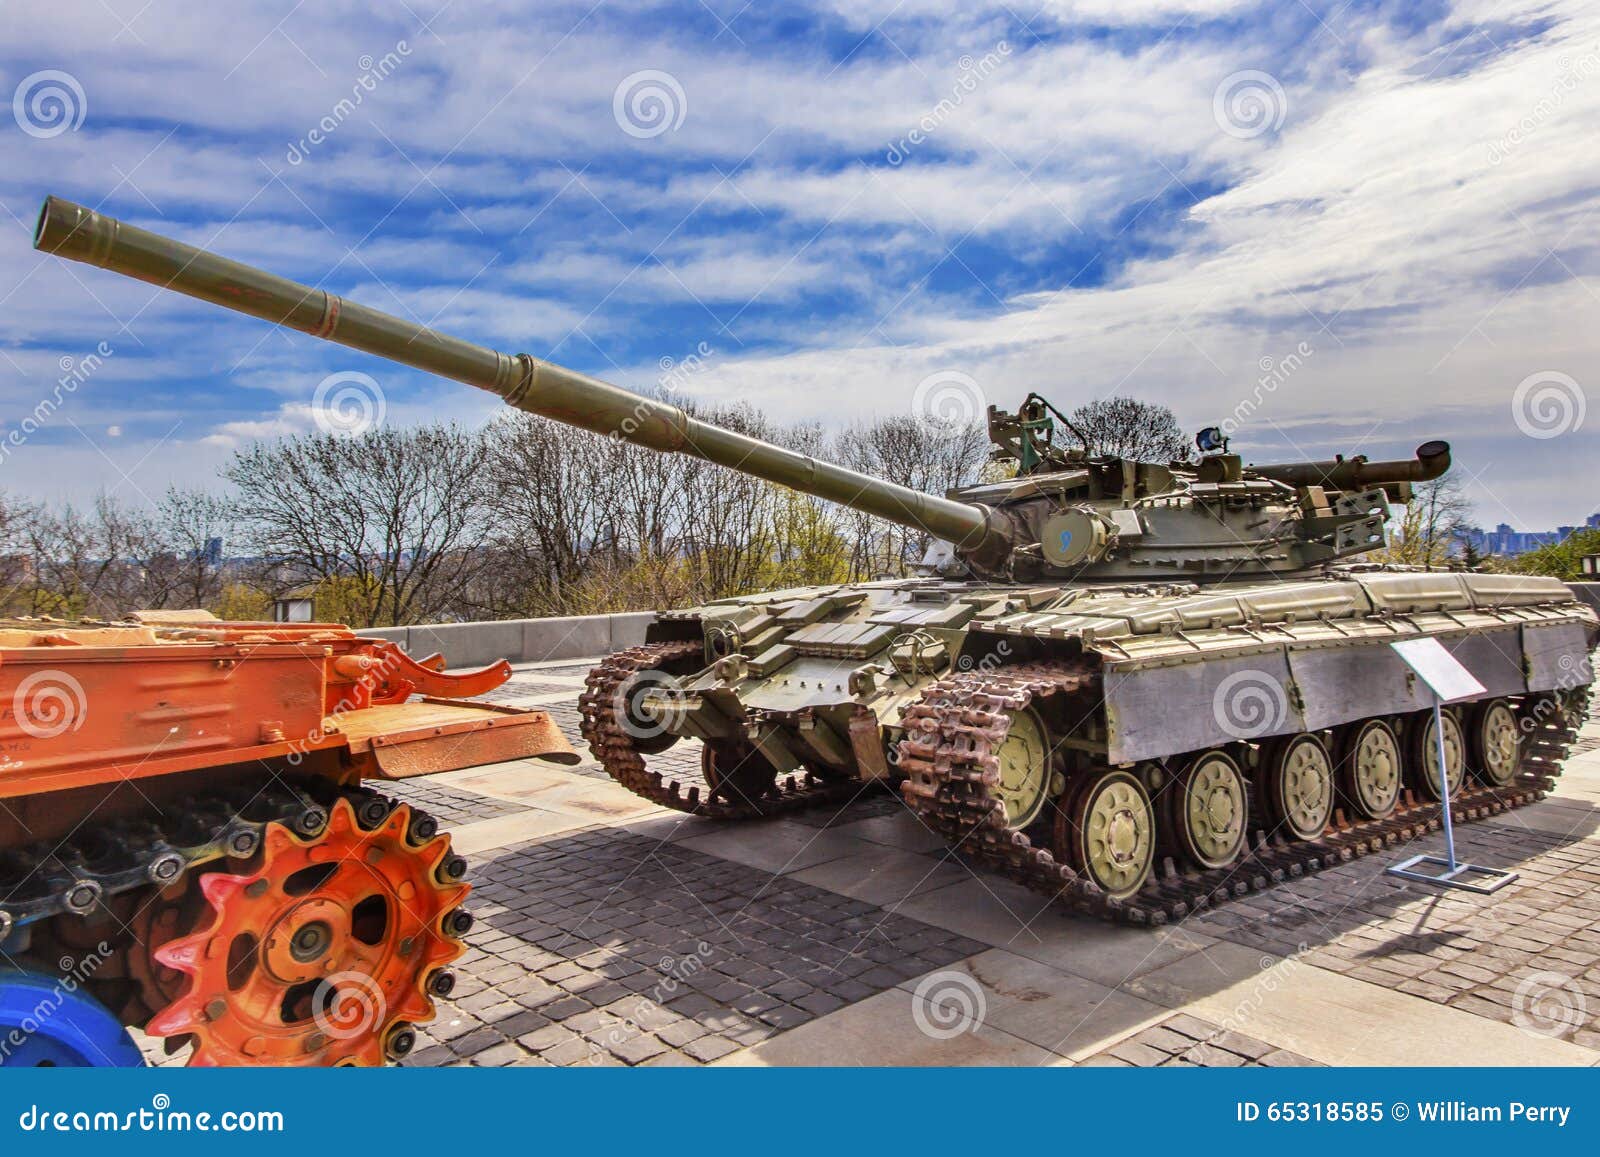 russian modern tank recent conflict monument kiev ukraine